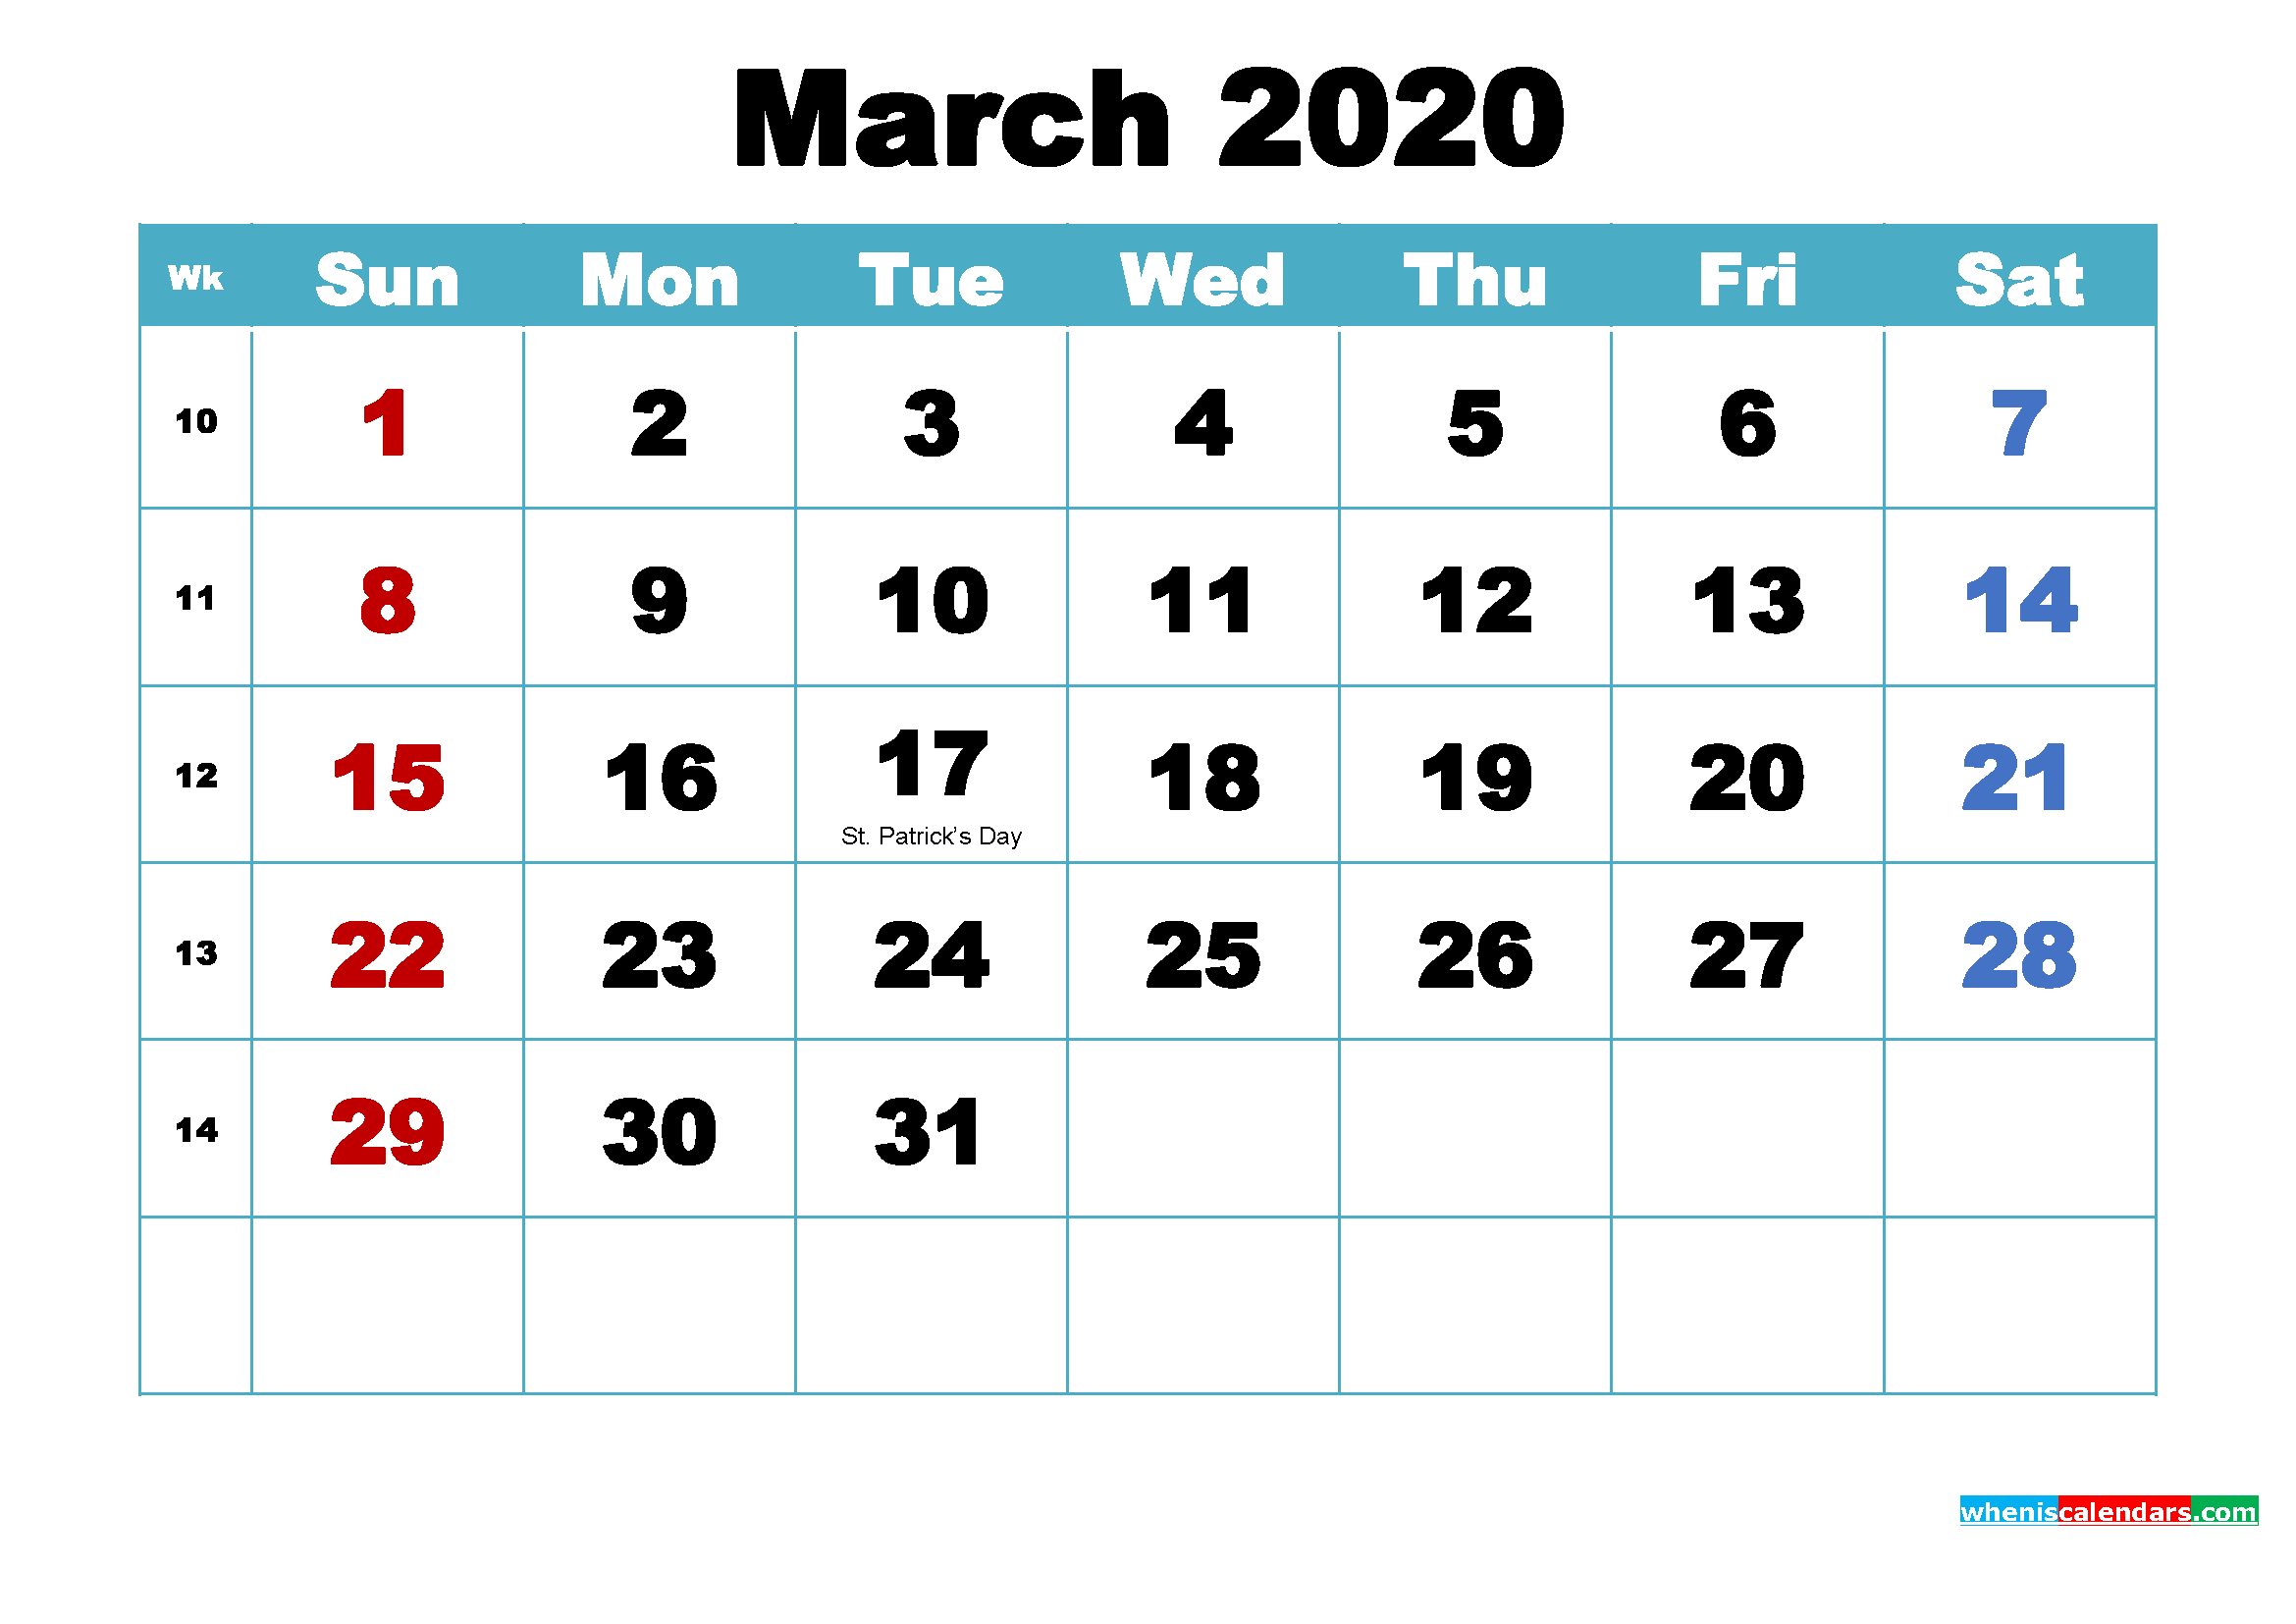 March 2020 Calendar Wallpaper Free Download - Free